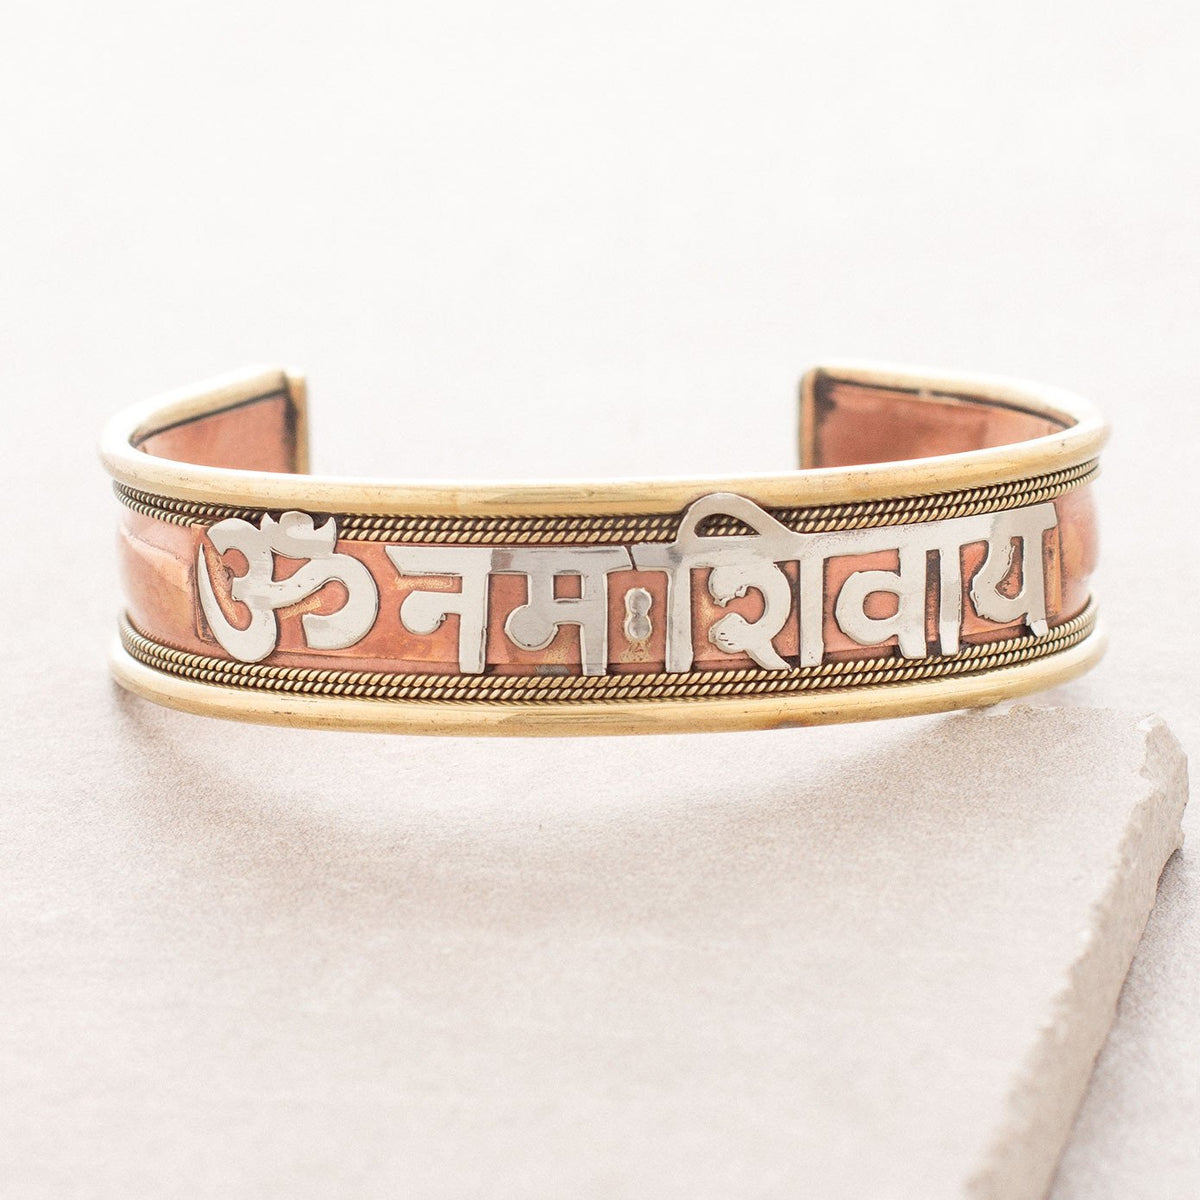 Mantra Bracelet (Om Namah Shivaya) - Gifts from the Earth | Geologic